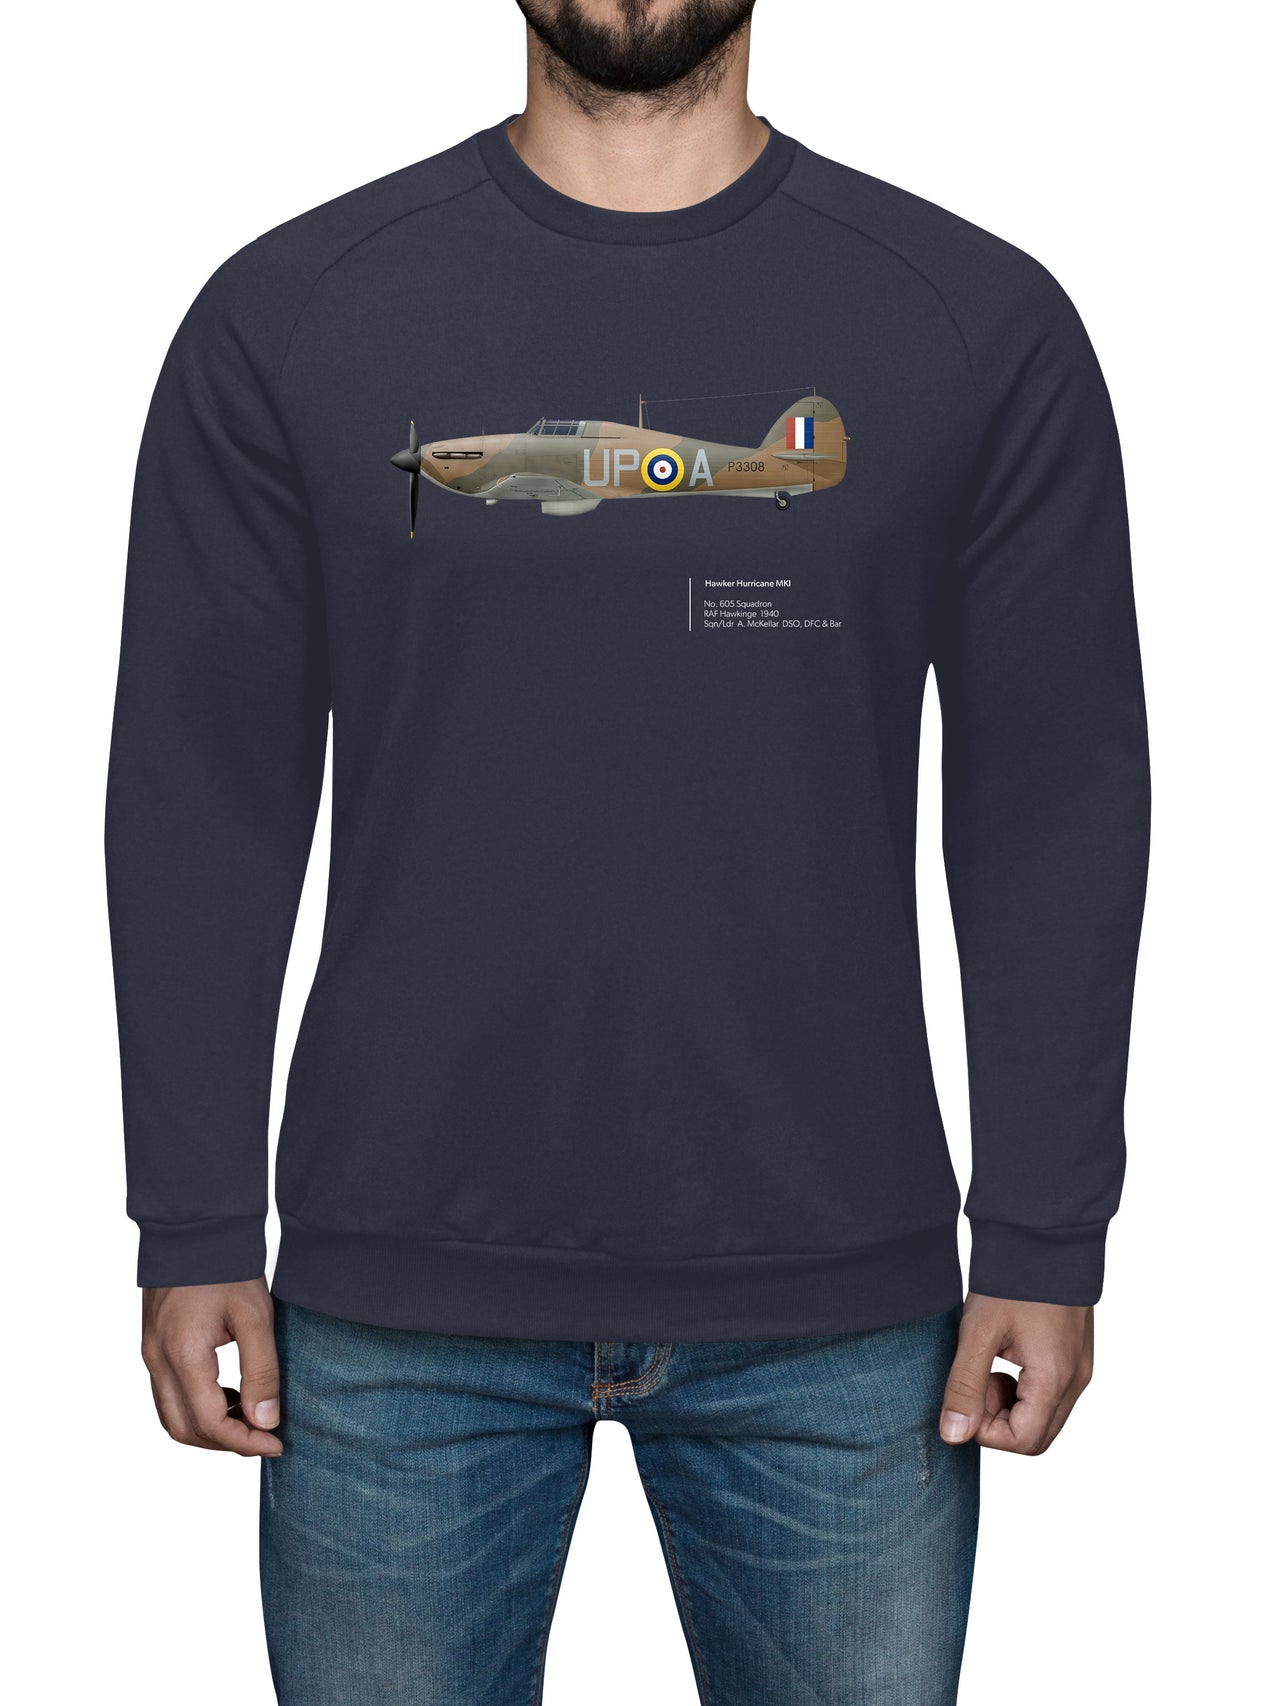 Hurricane 605SQN - Sweat Shirt